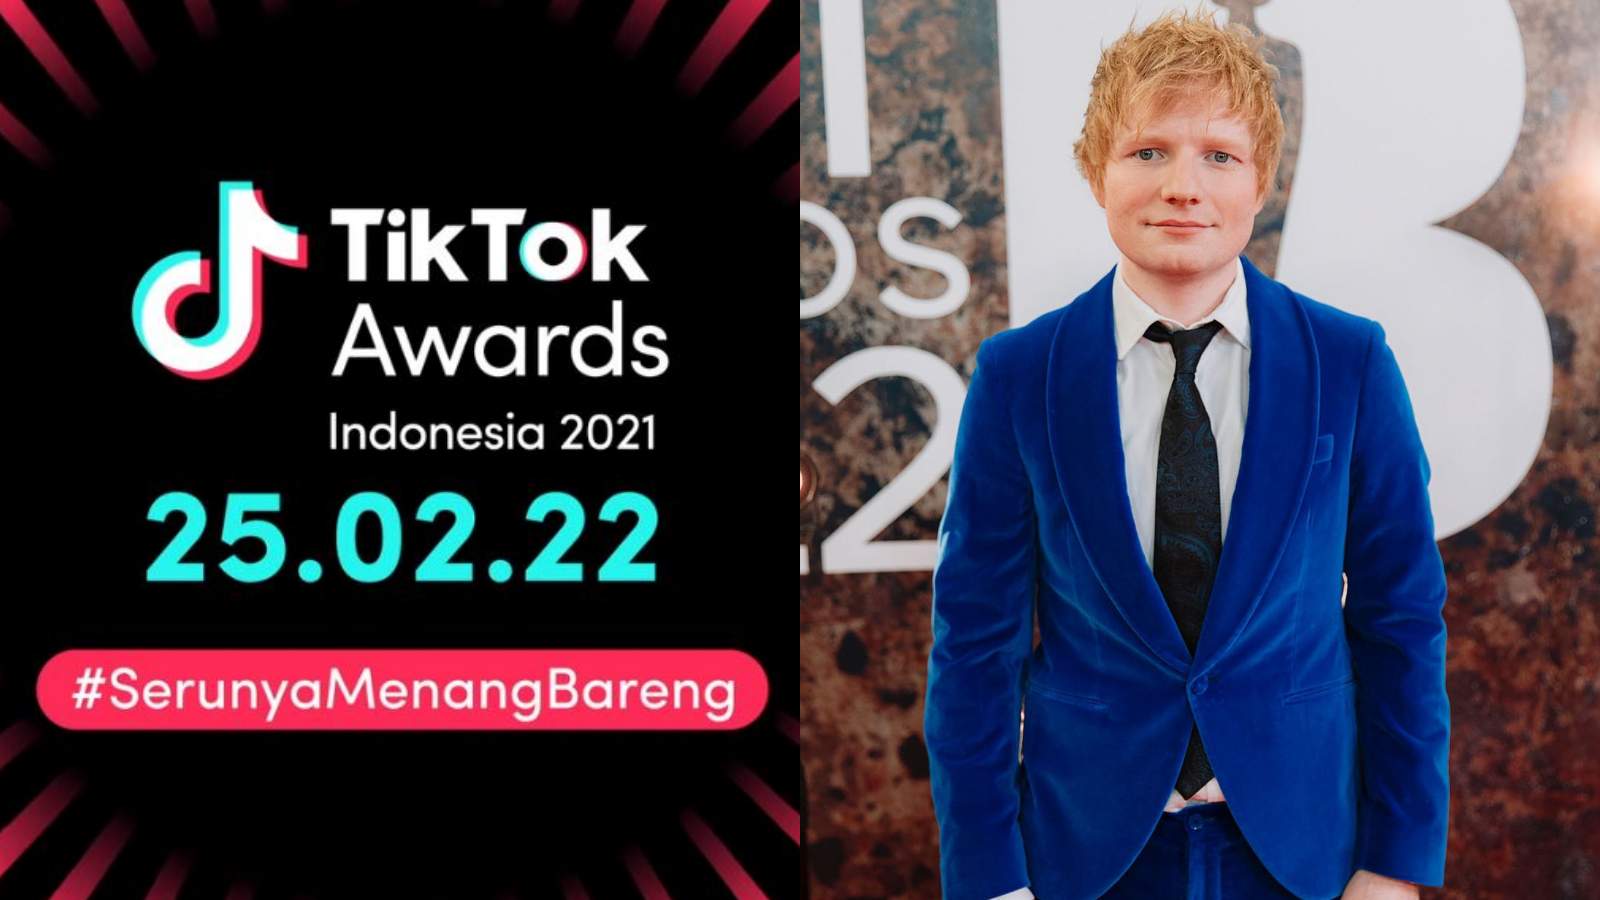 TikTok Awards Indonesia 2021 Bakal Digelar, Ada Ed Sheeran Gaes